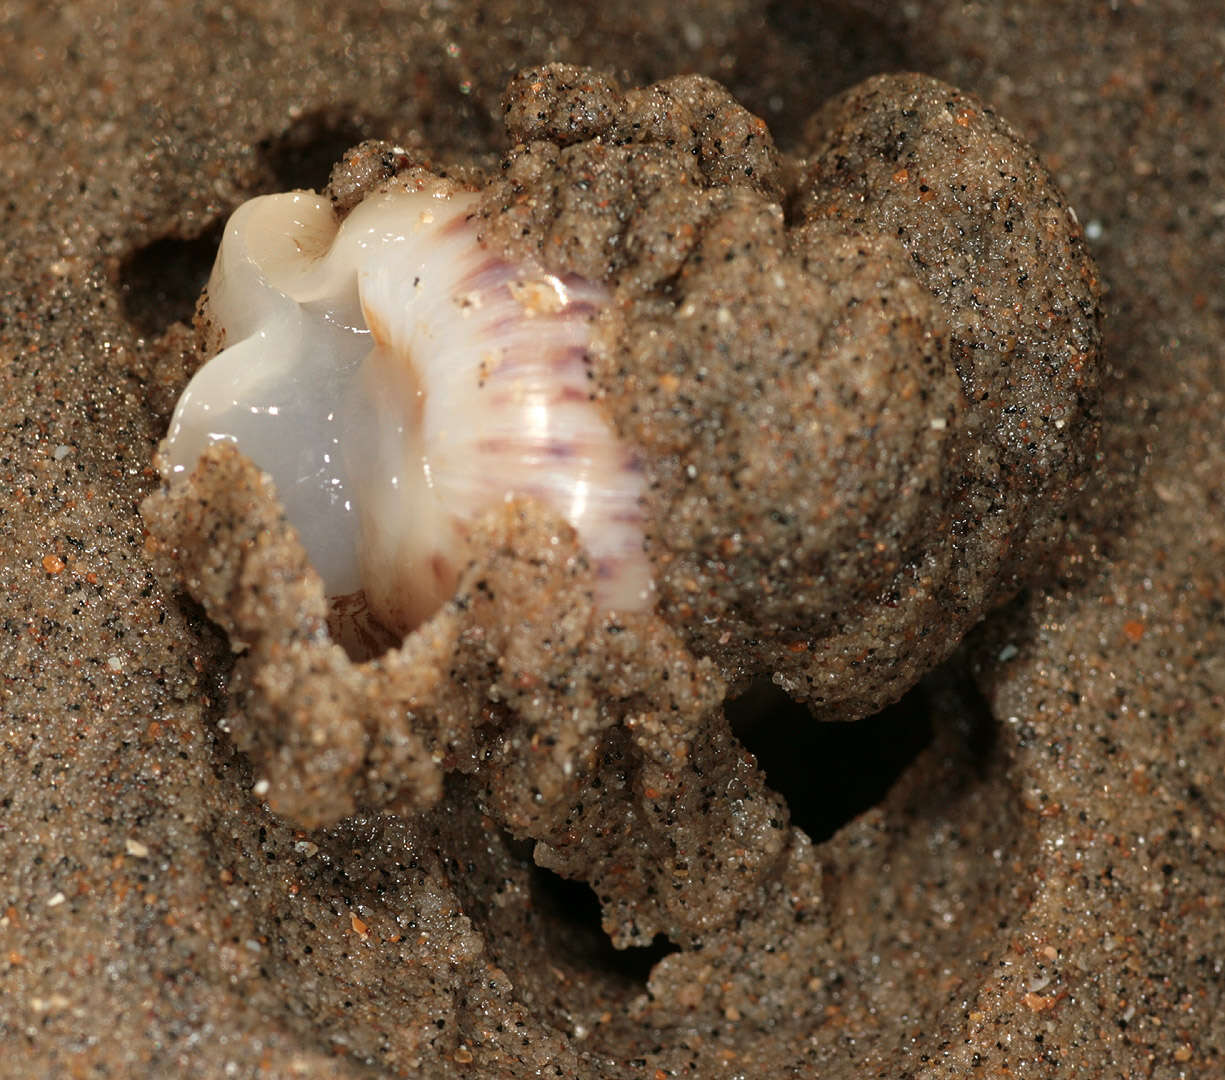 Image of Alder's necklace shell